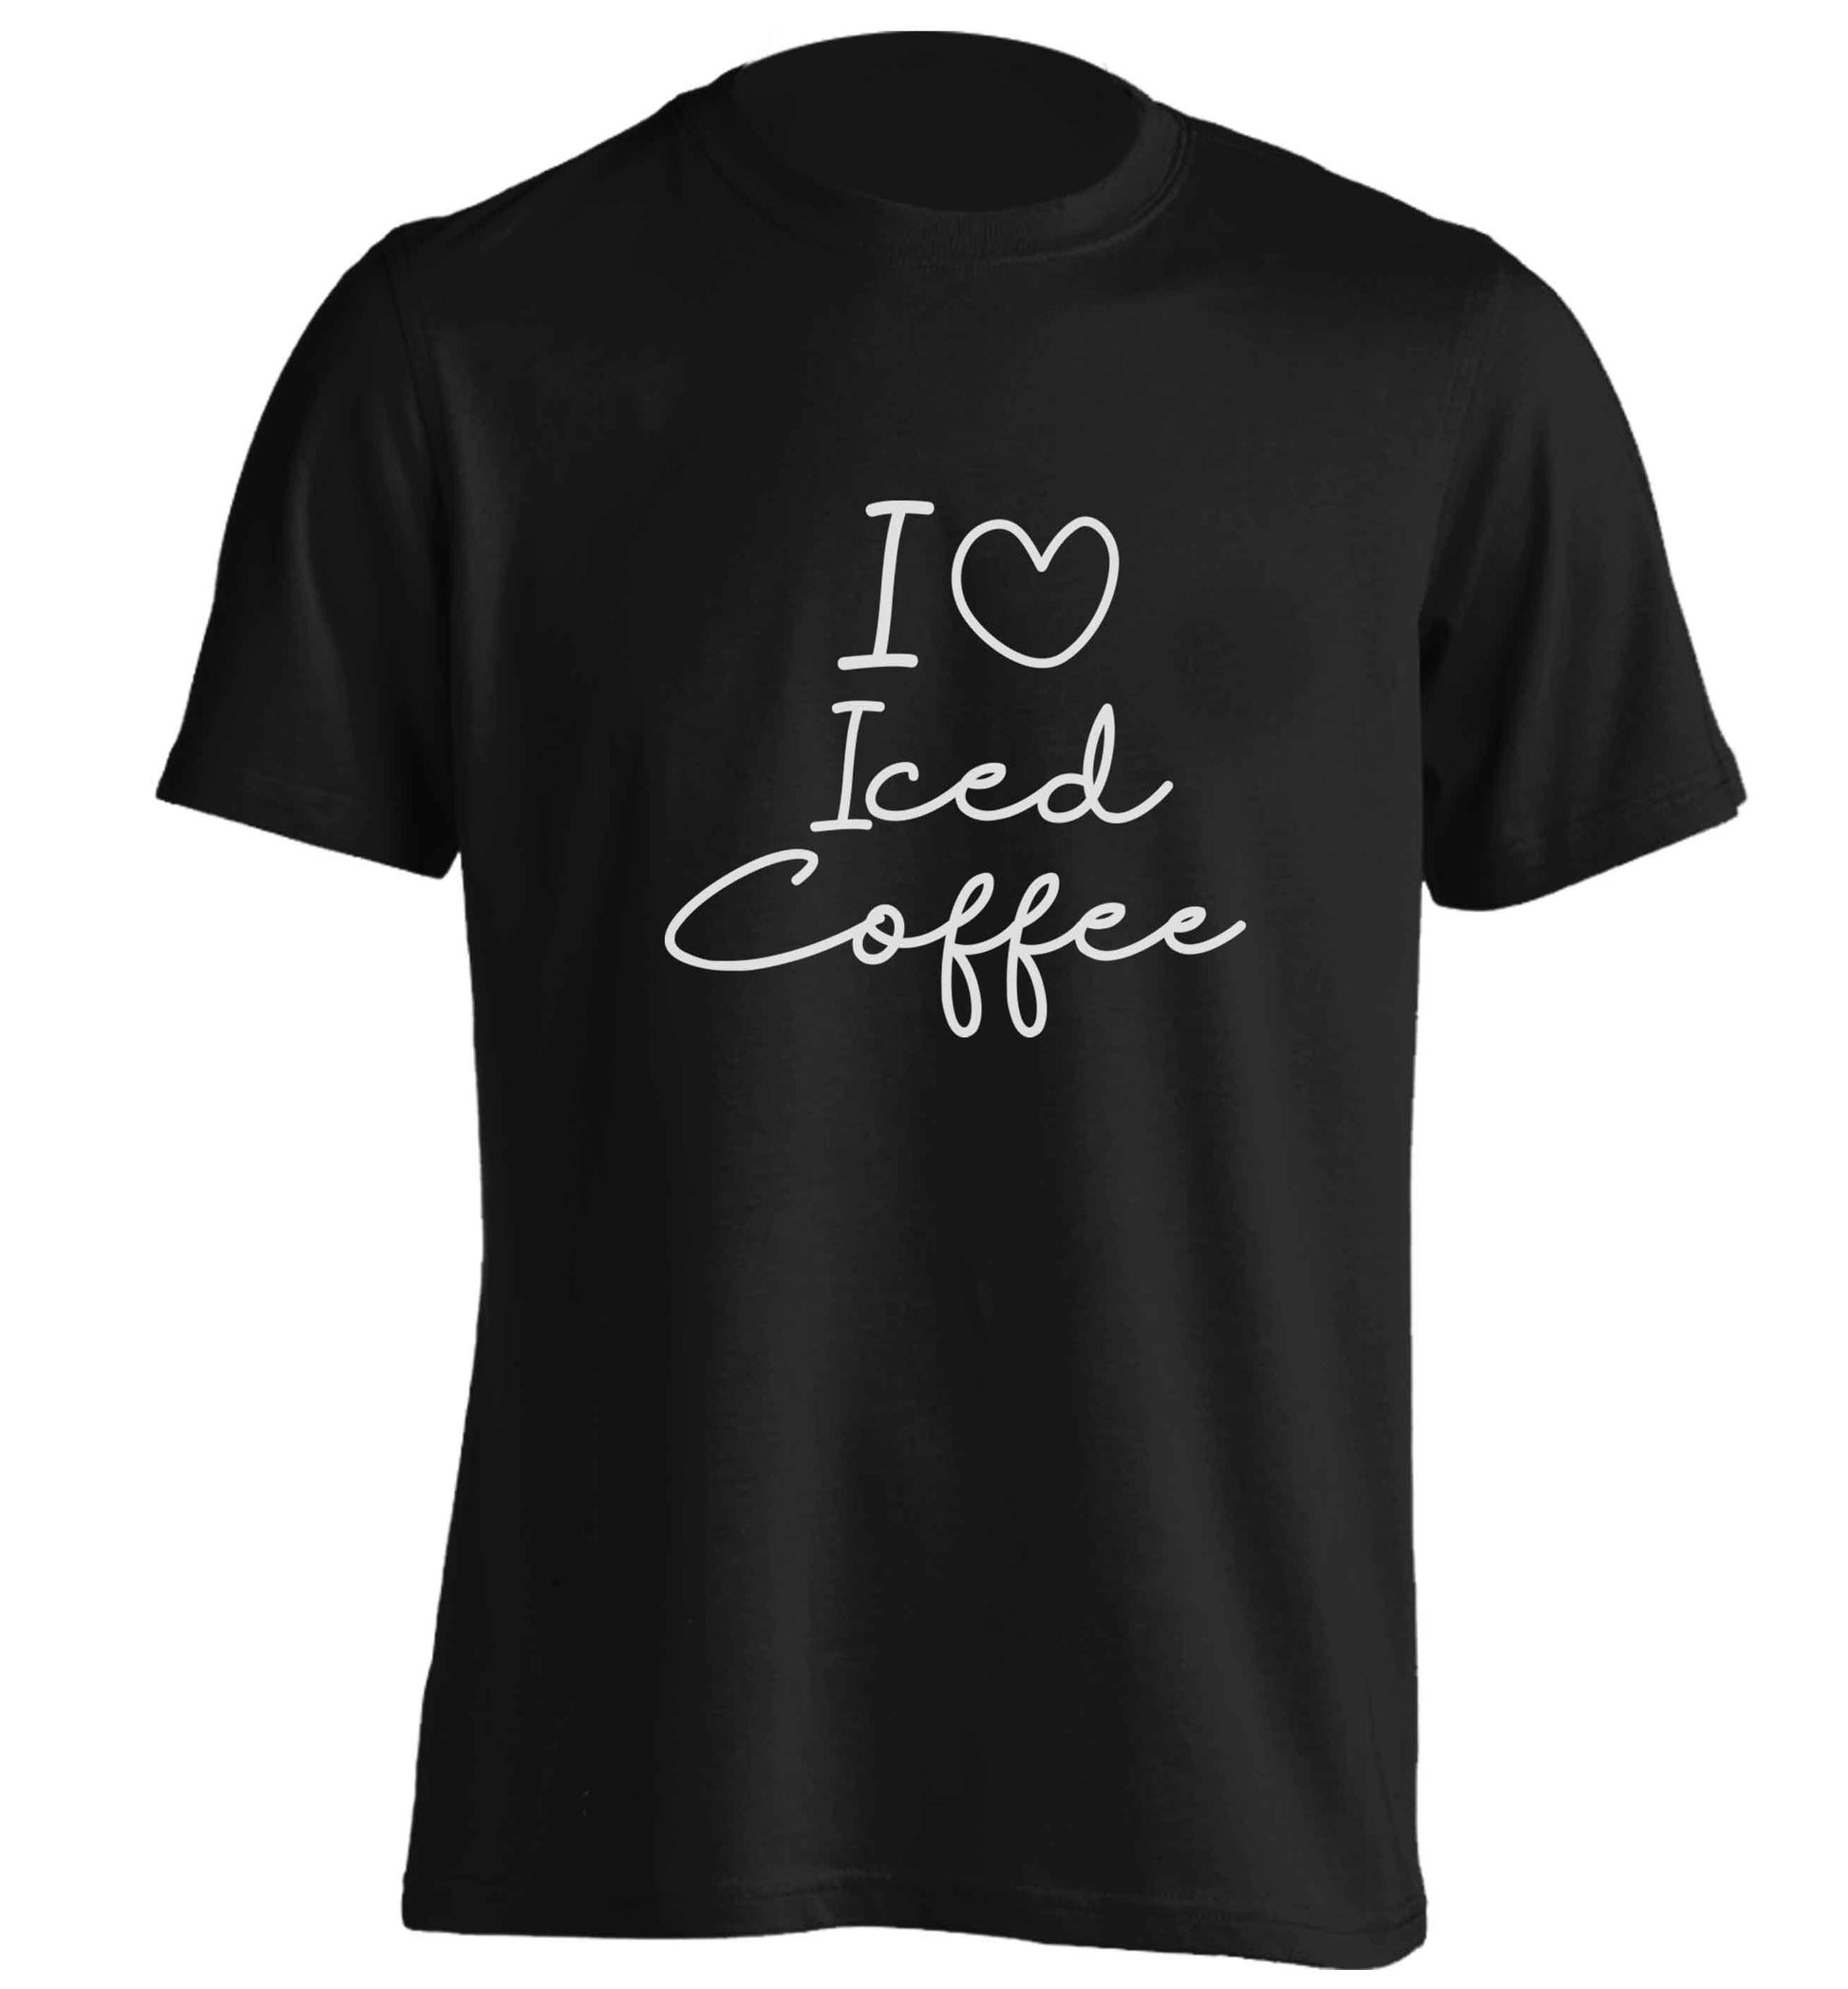 I love iced coffee adults unisex black Tshirt 2XL